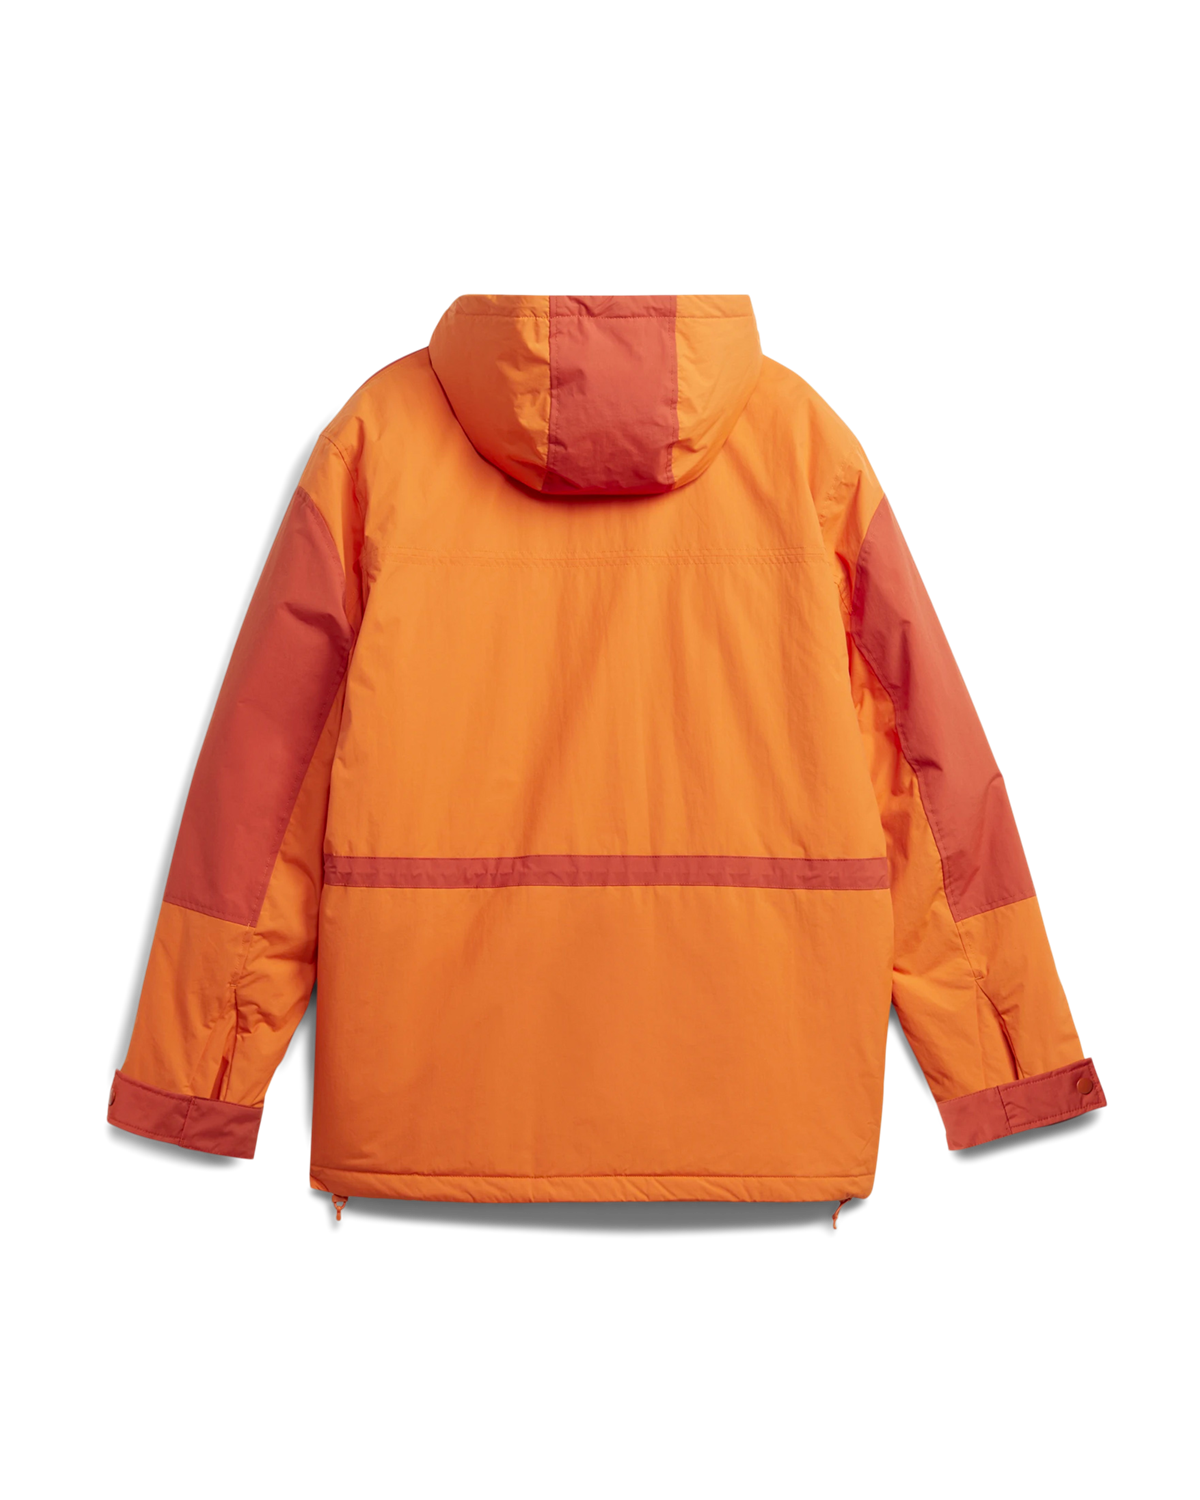 Kearsley Parka SPZL adidas Originals Outerwear Jackets Orange